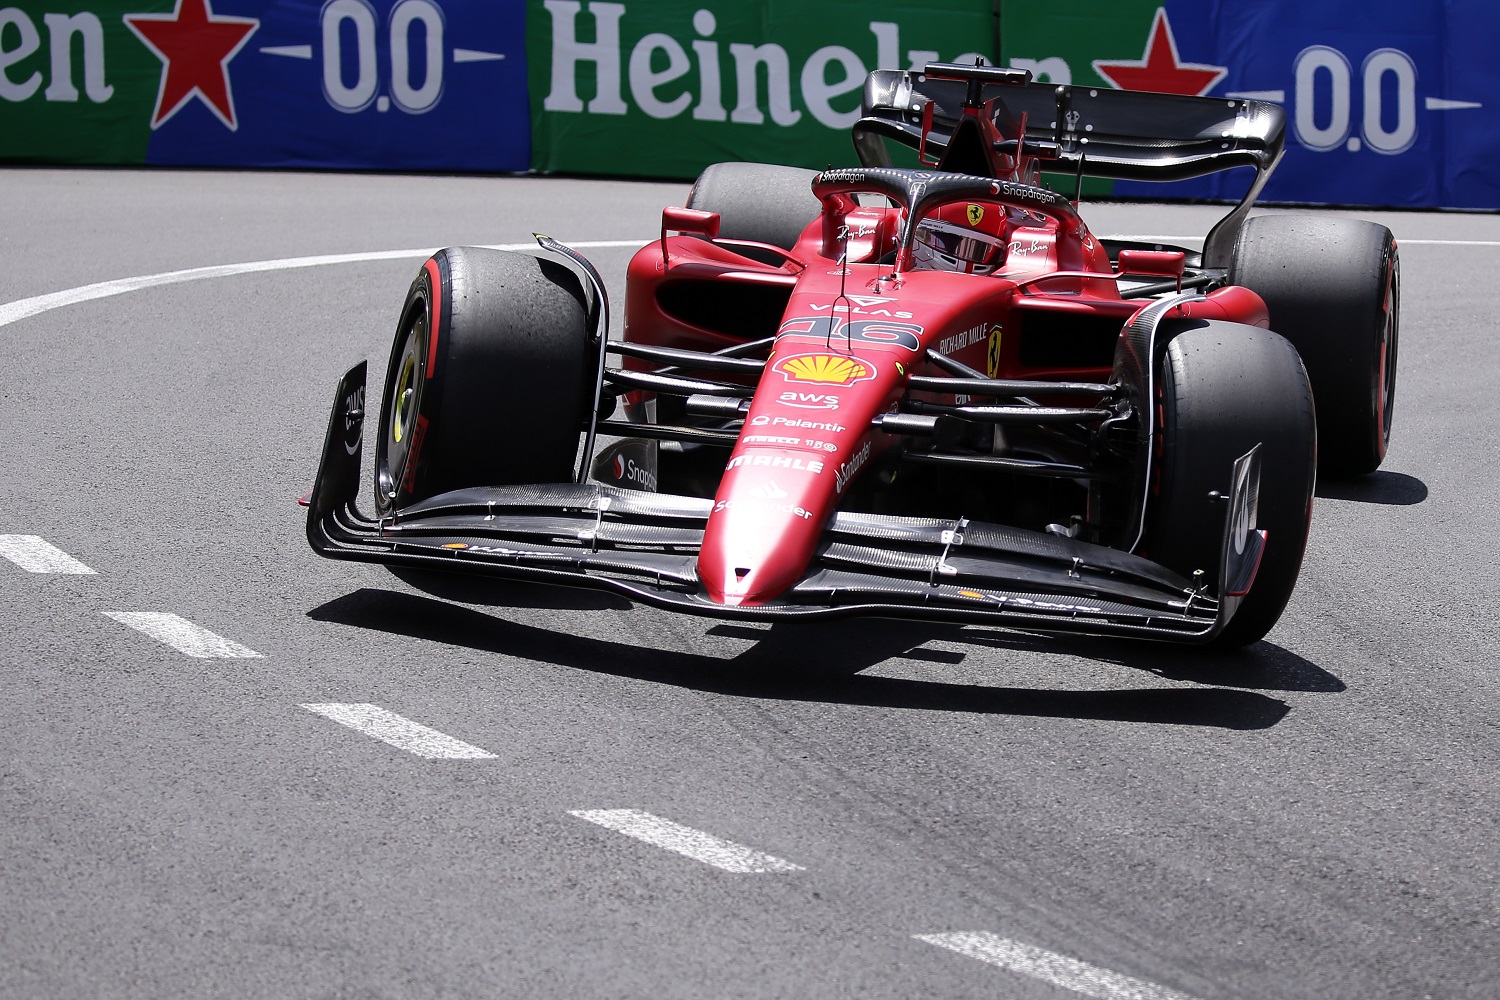 Charles Leclerc of Scuderia Ferrari on track during final practice for the Formula 1 Grand Prix of Monaco.